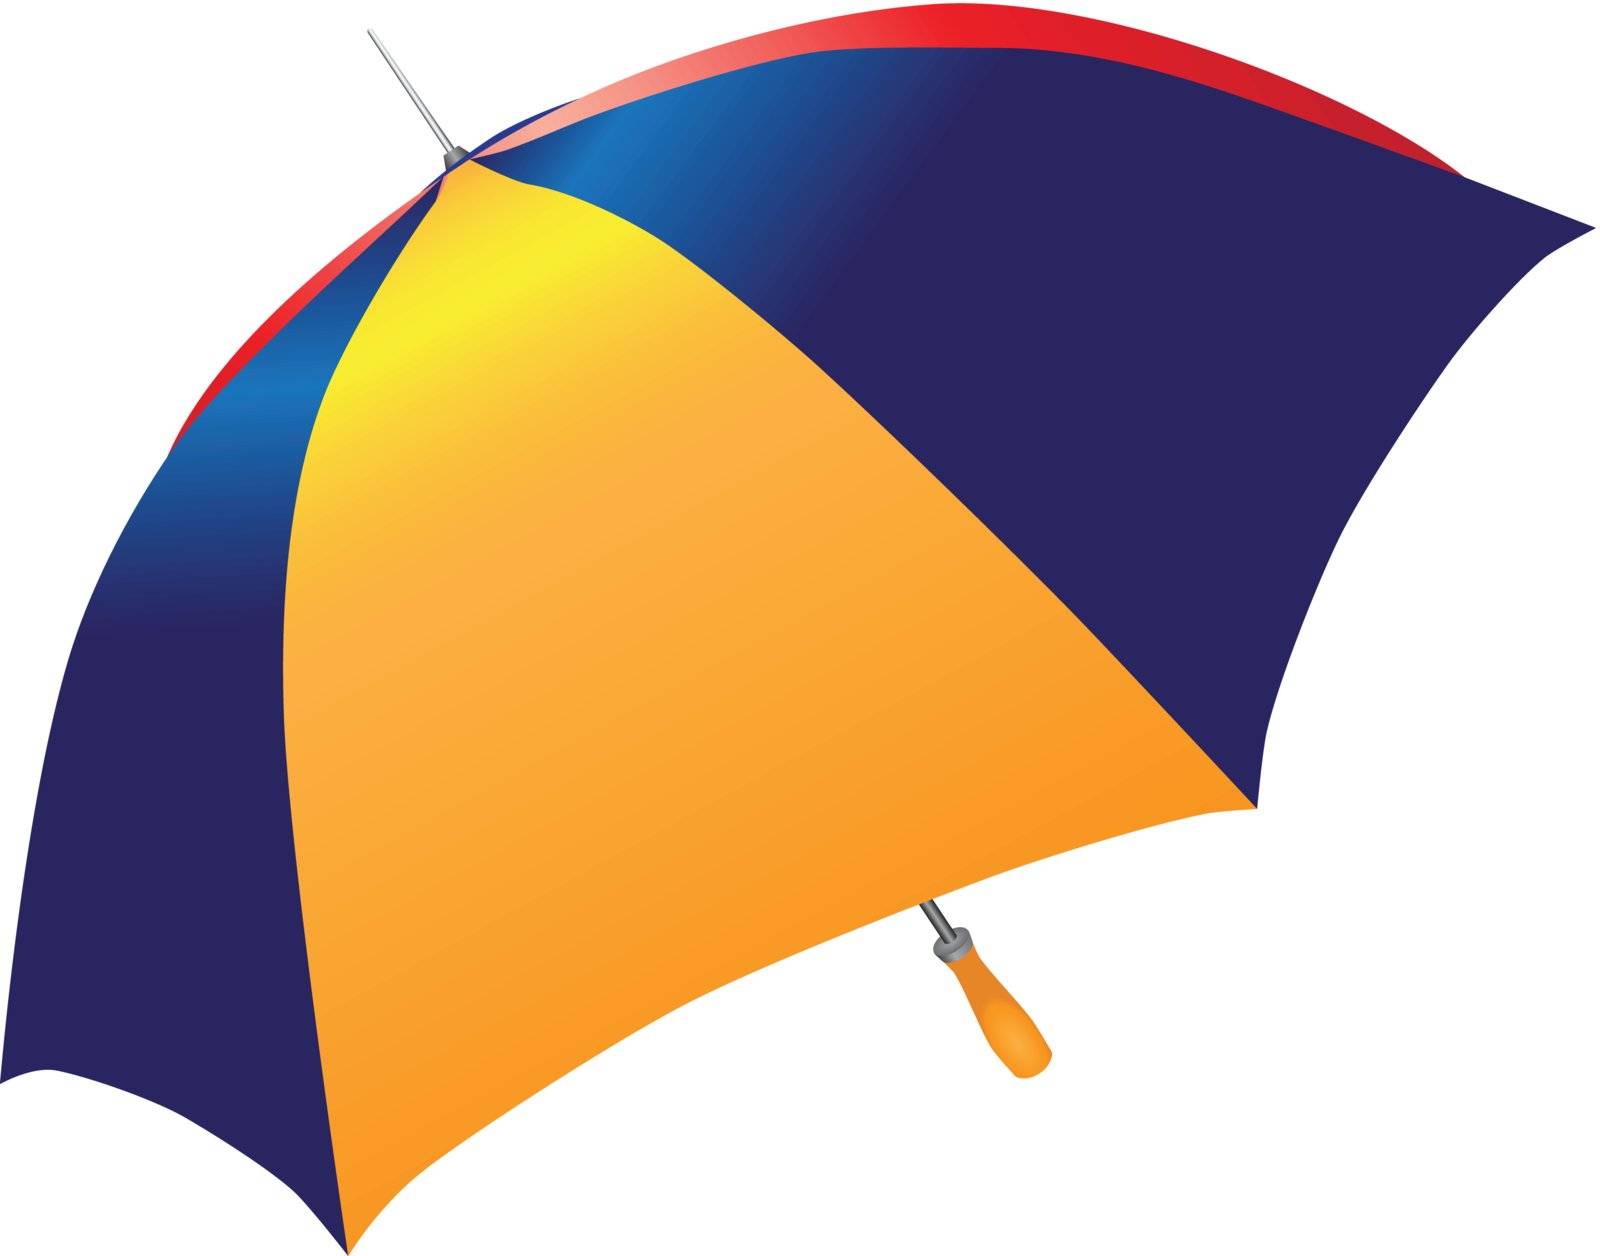 Big multicolored umbrella against the weather. Vector illustration.